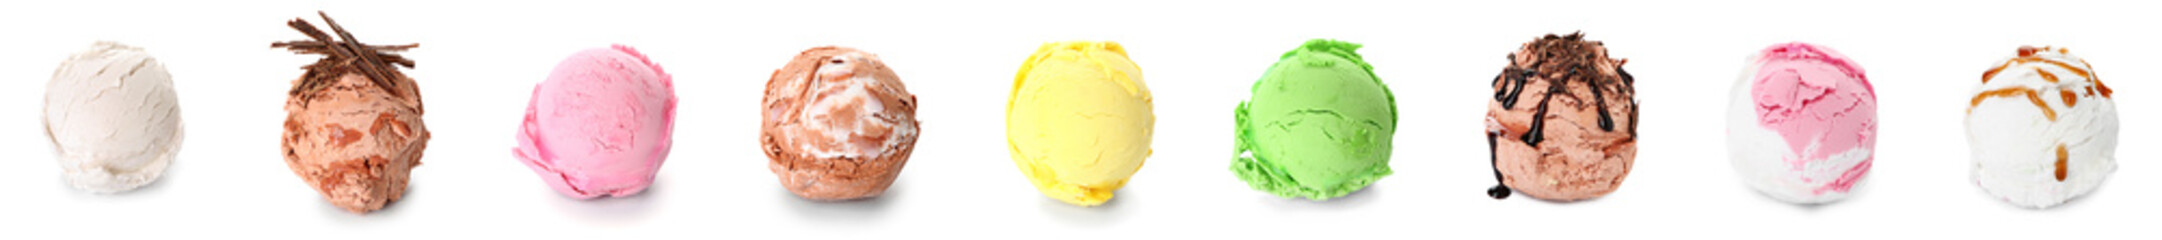 Set of tasty ice cream balls on white background